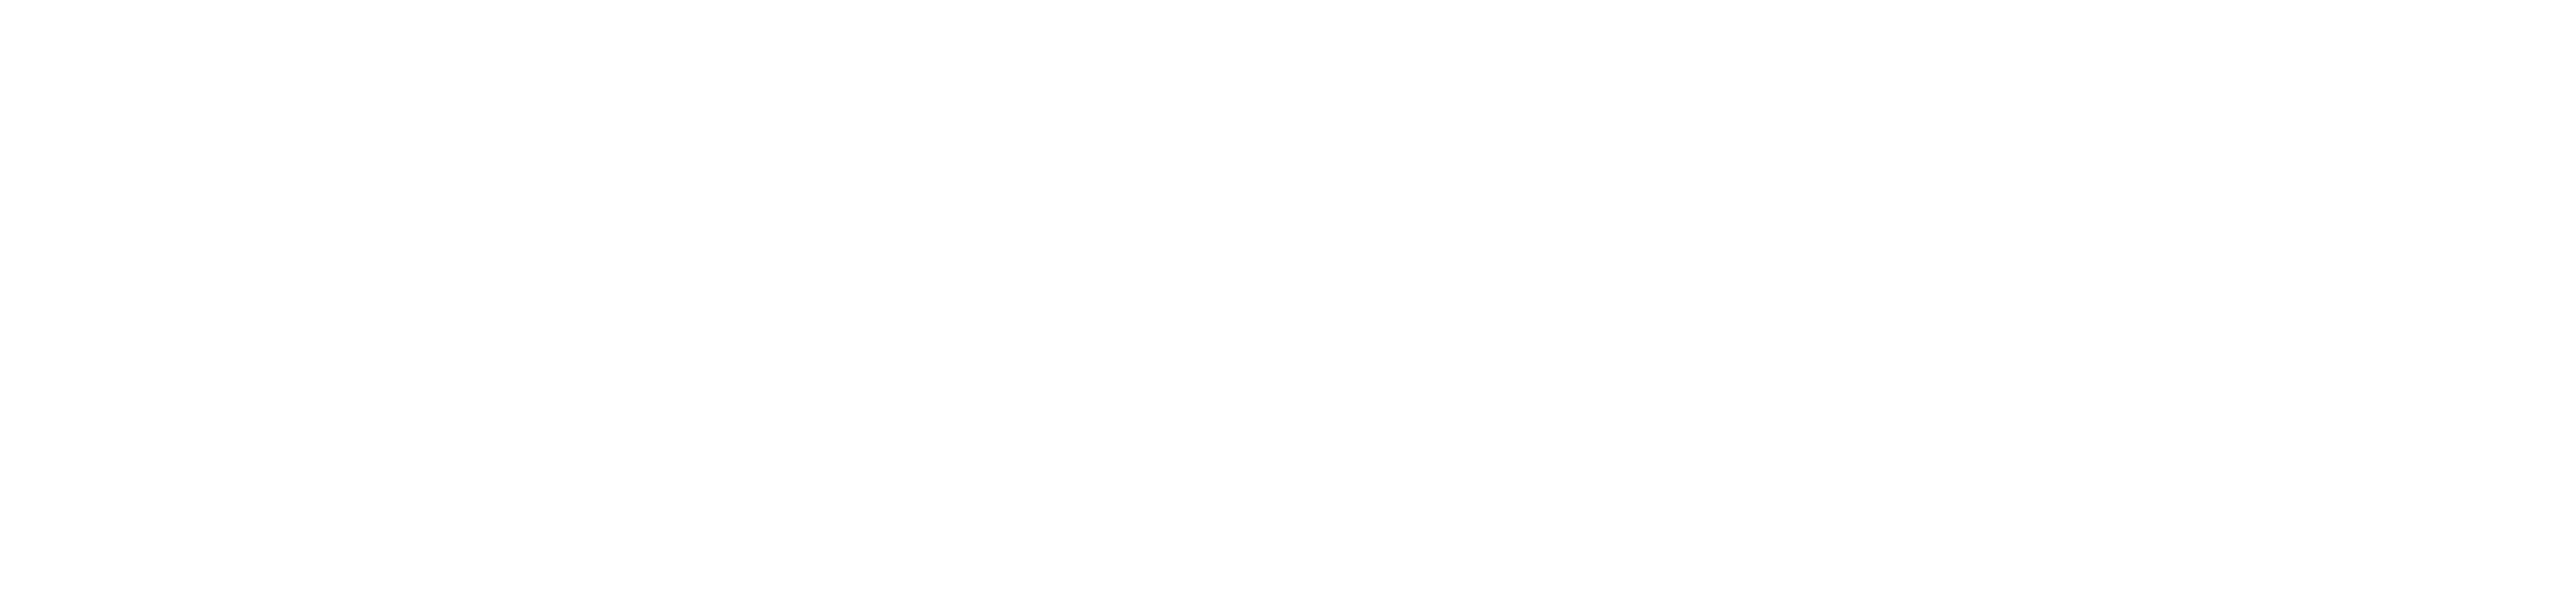 Azione Counseling